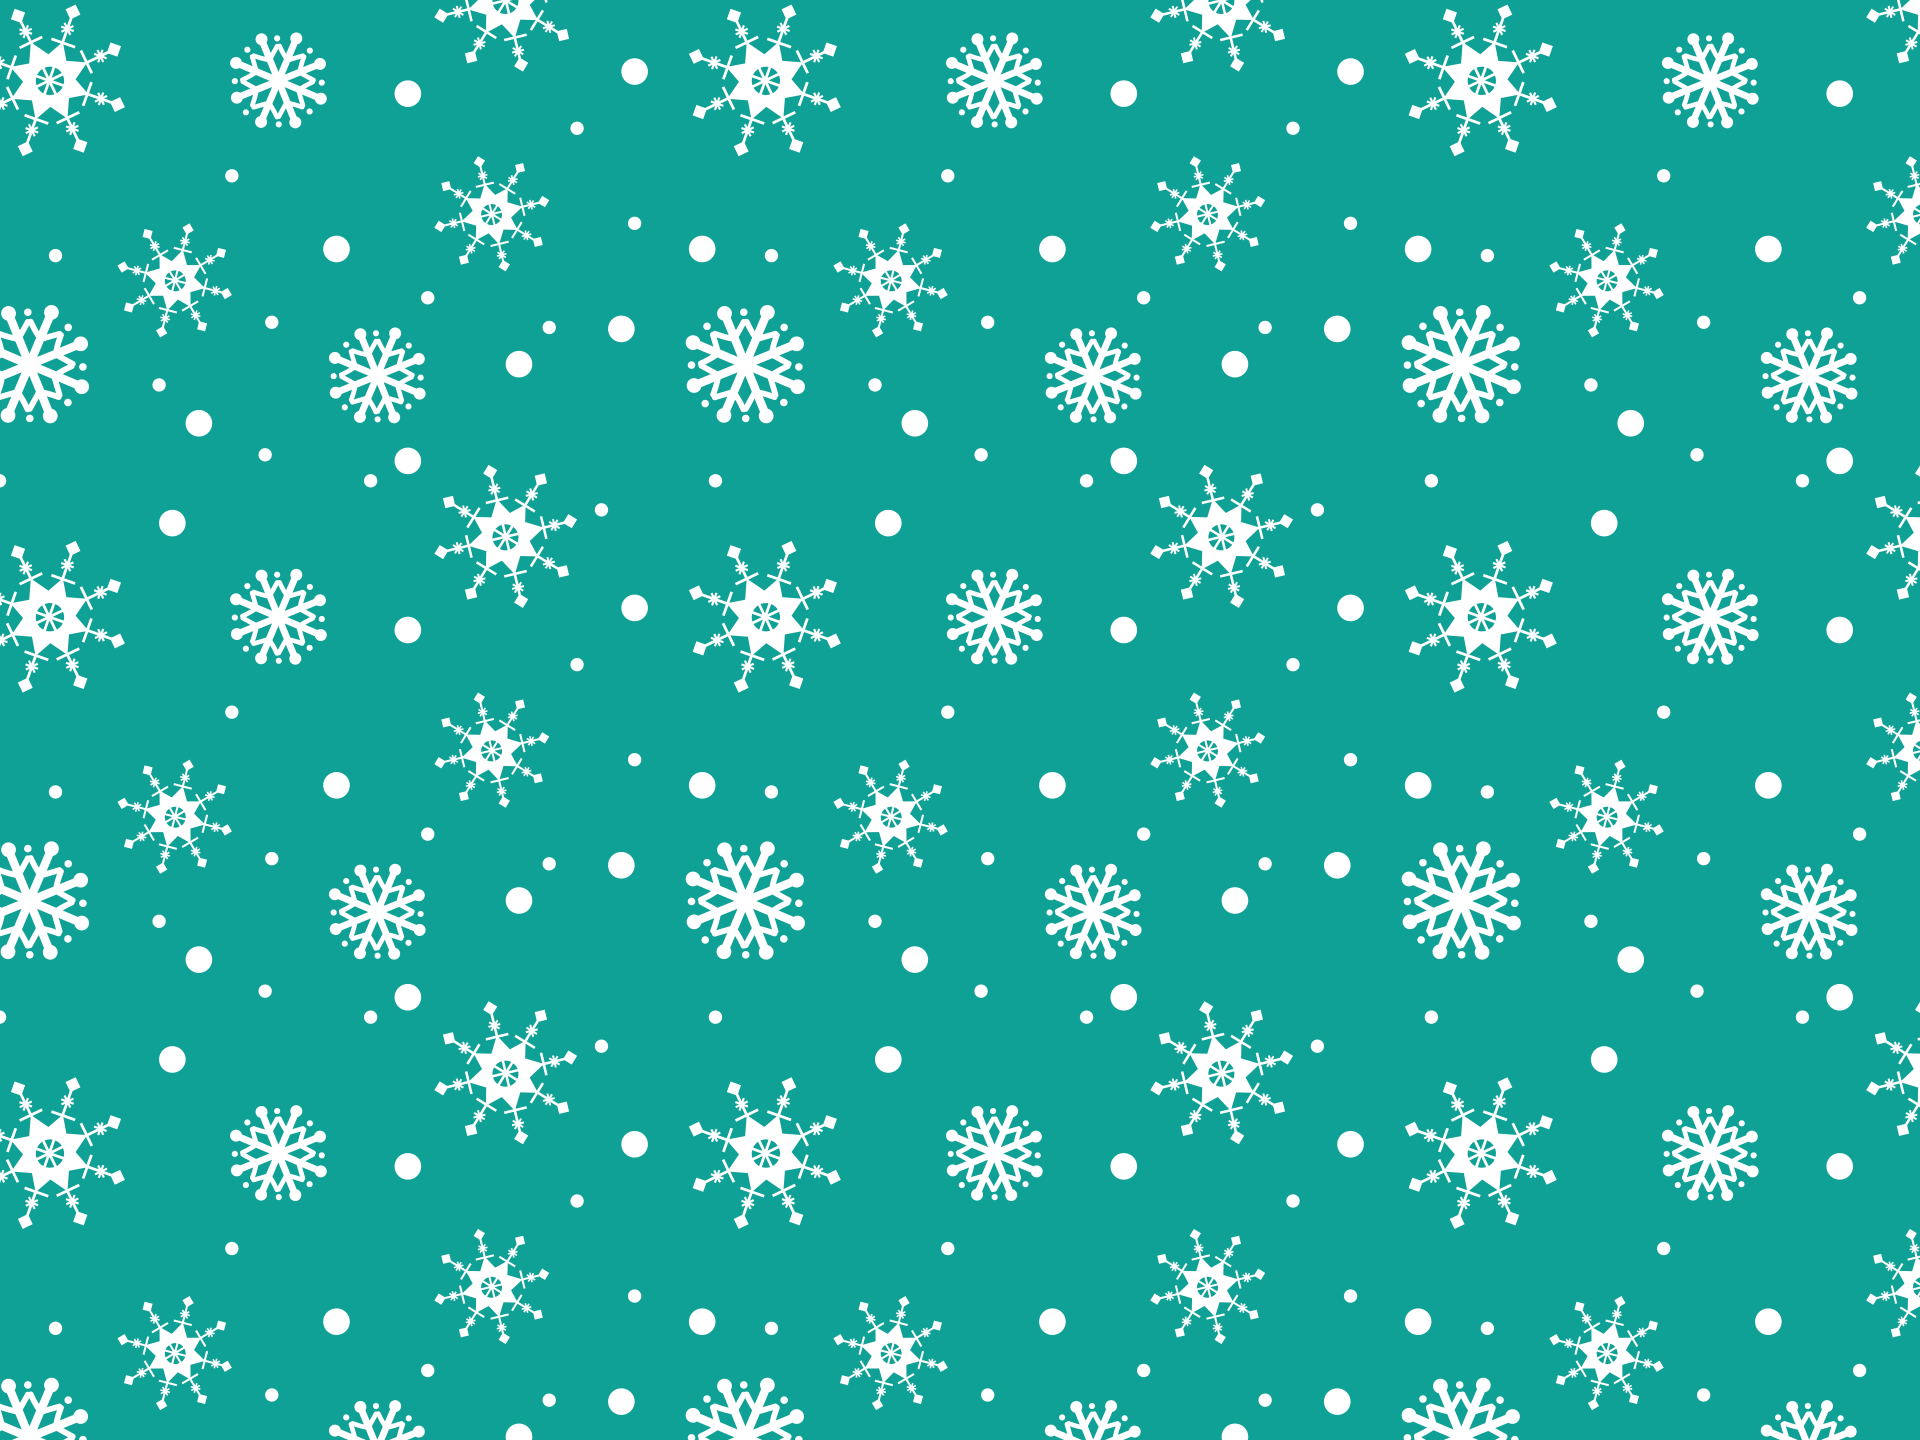 Various snowflakes illustration on green background